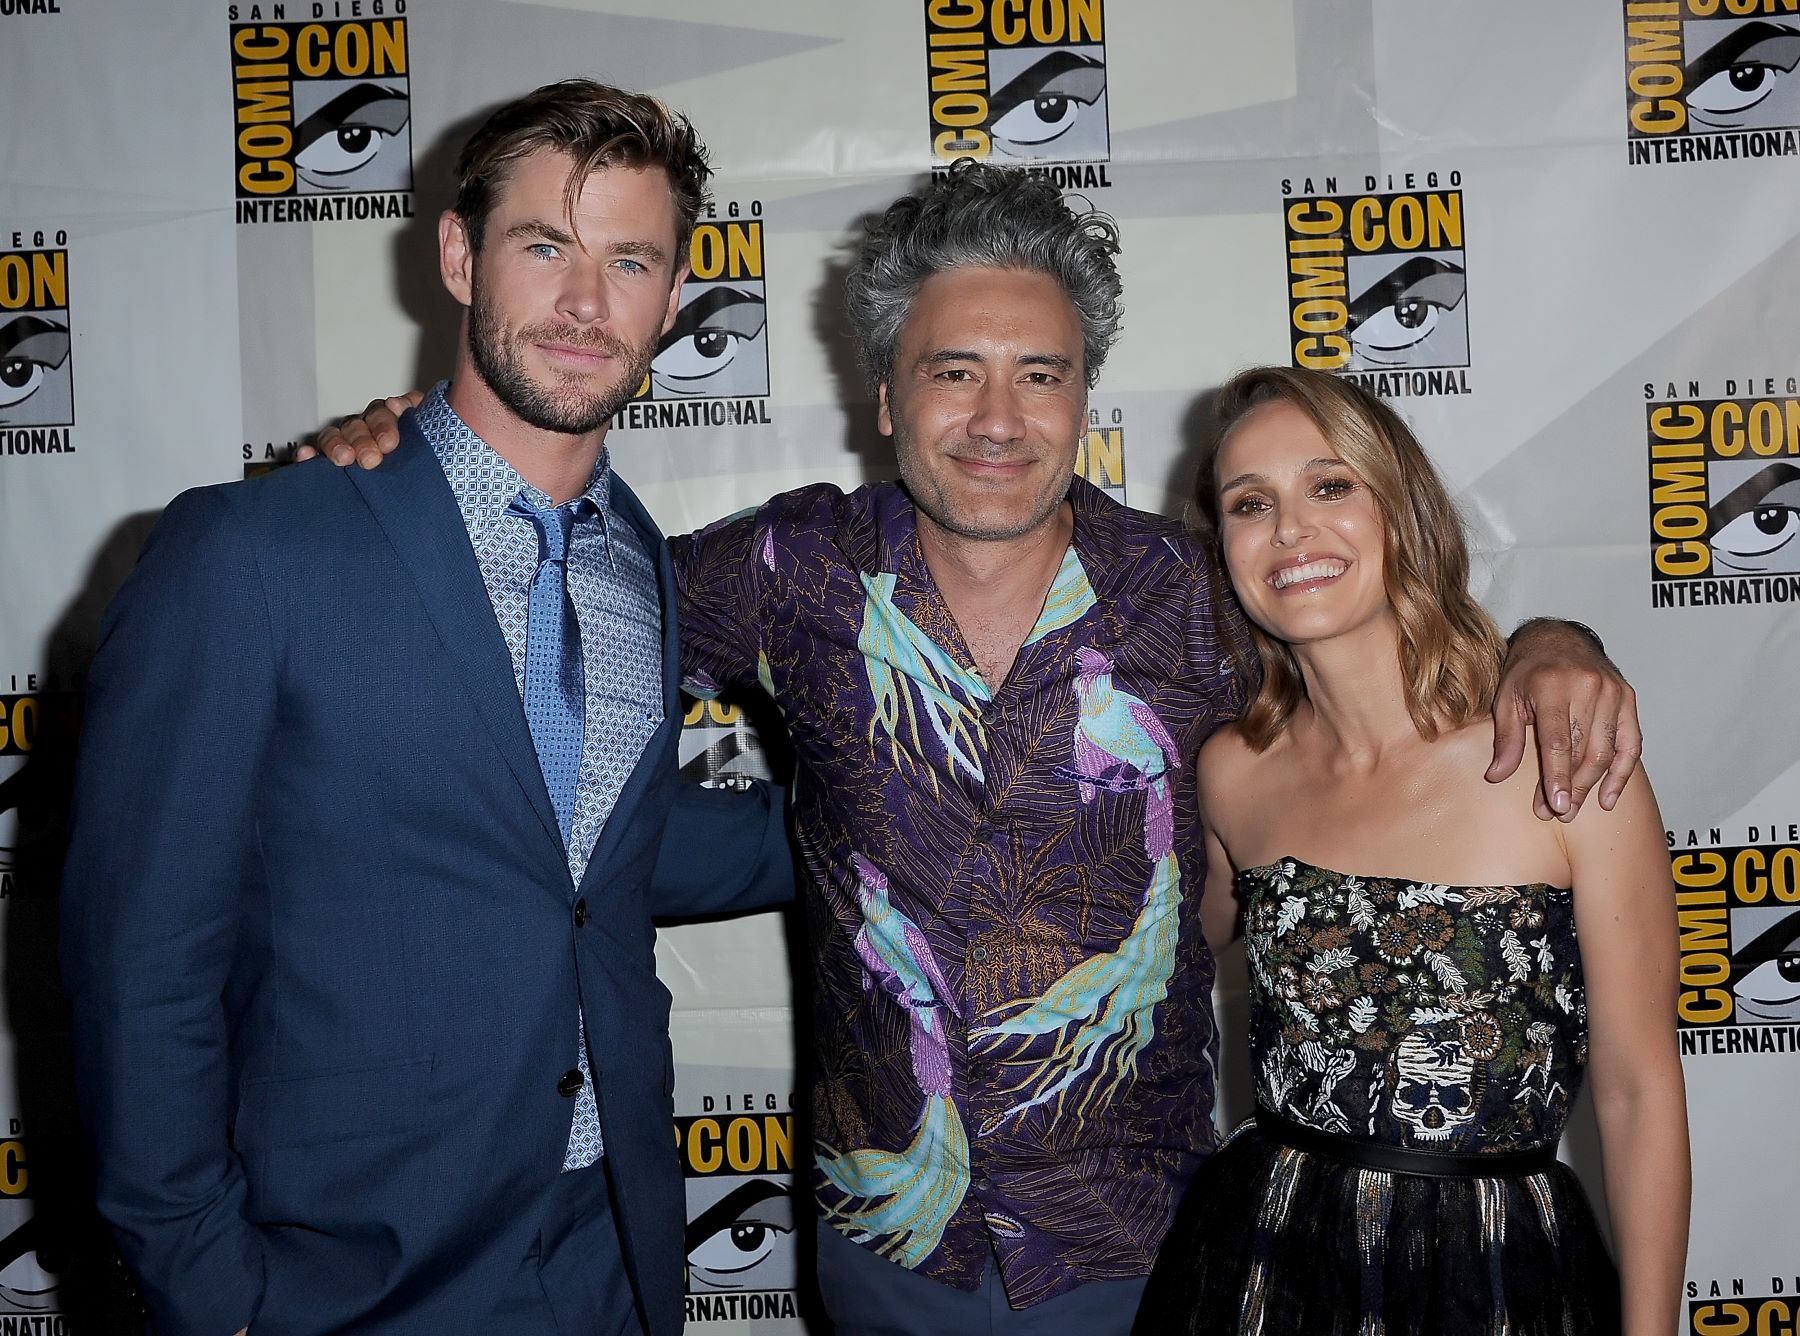 Chris Hemsworth, Taika Waititi, and Natalie Portman at the 2019 San Diego Comic-Con International